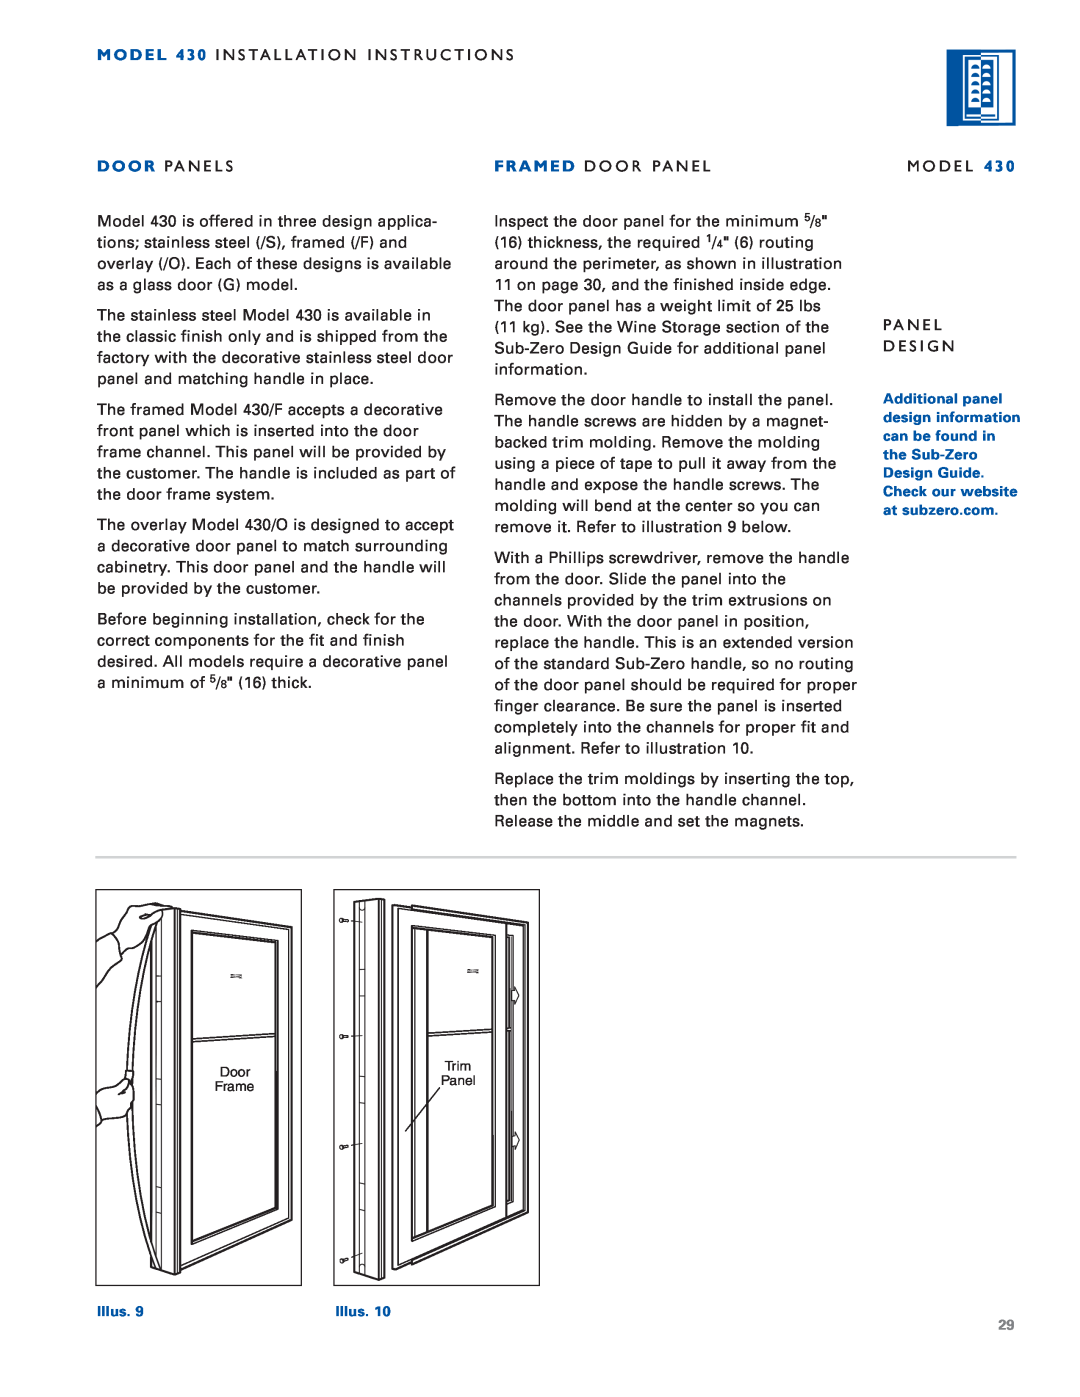 Sub-Zero 424/O, 430/O, 430/F installation instructions Door Frame 